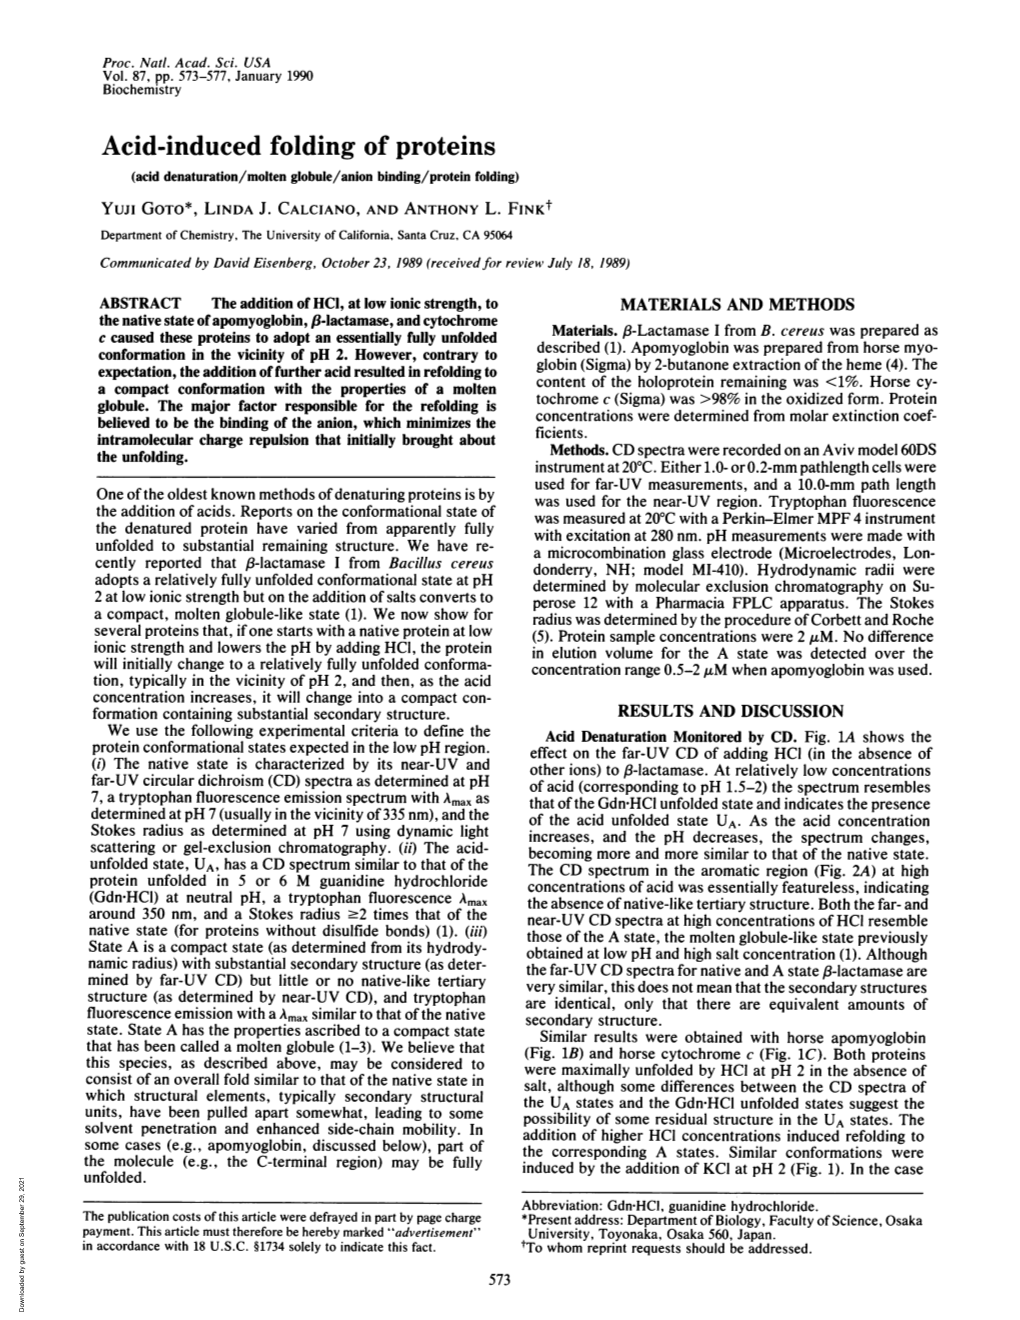 Acid-Induced Folding of Proteins (Acid Denaturation/Molten Globule/Anion Binding/Protein Folding) Yuji Goto*, LINDA J